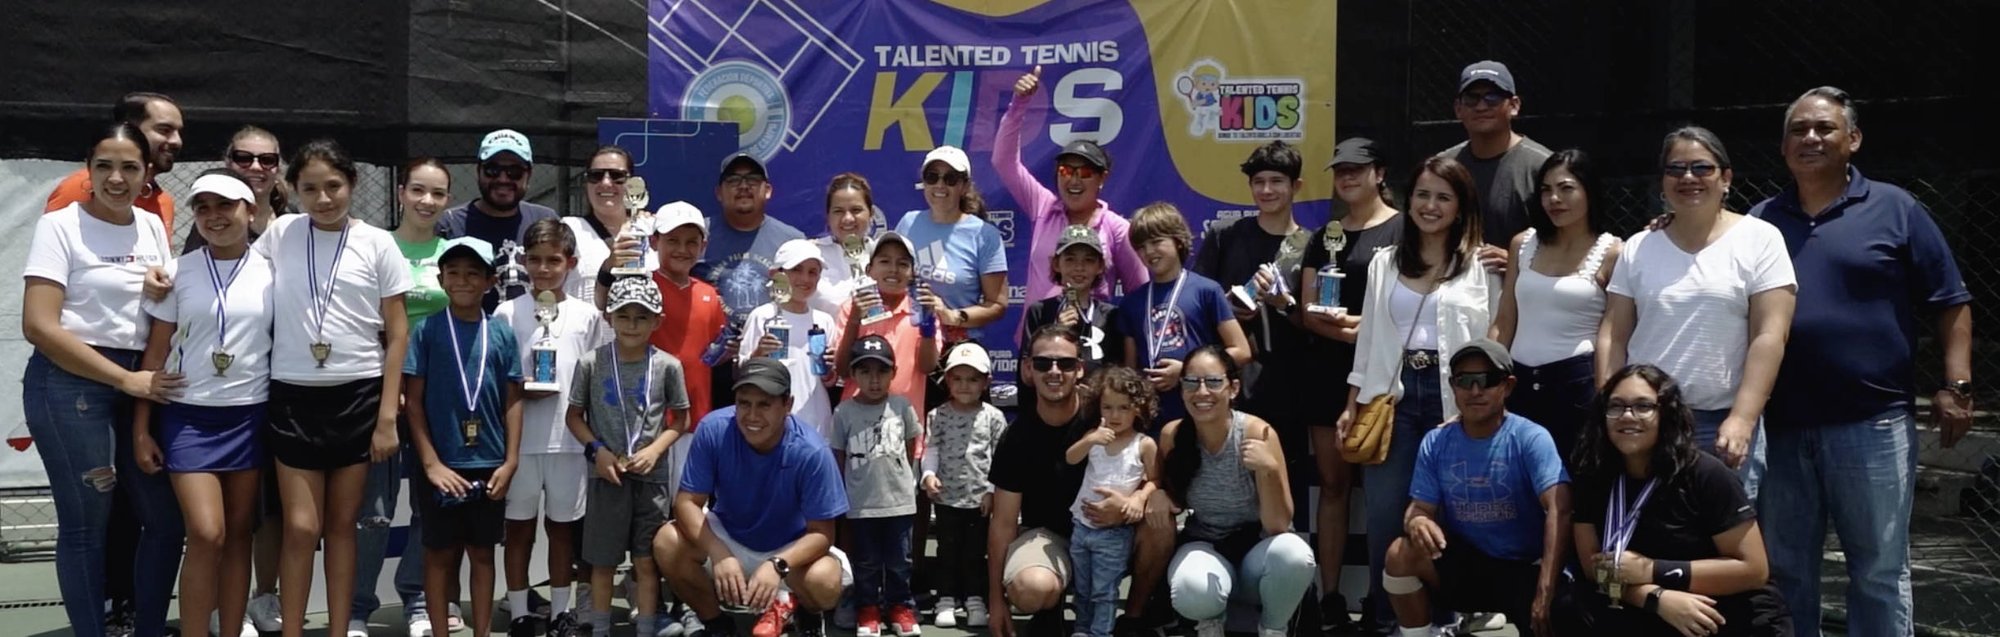 Talented Tennis Kids